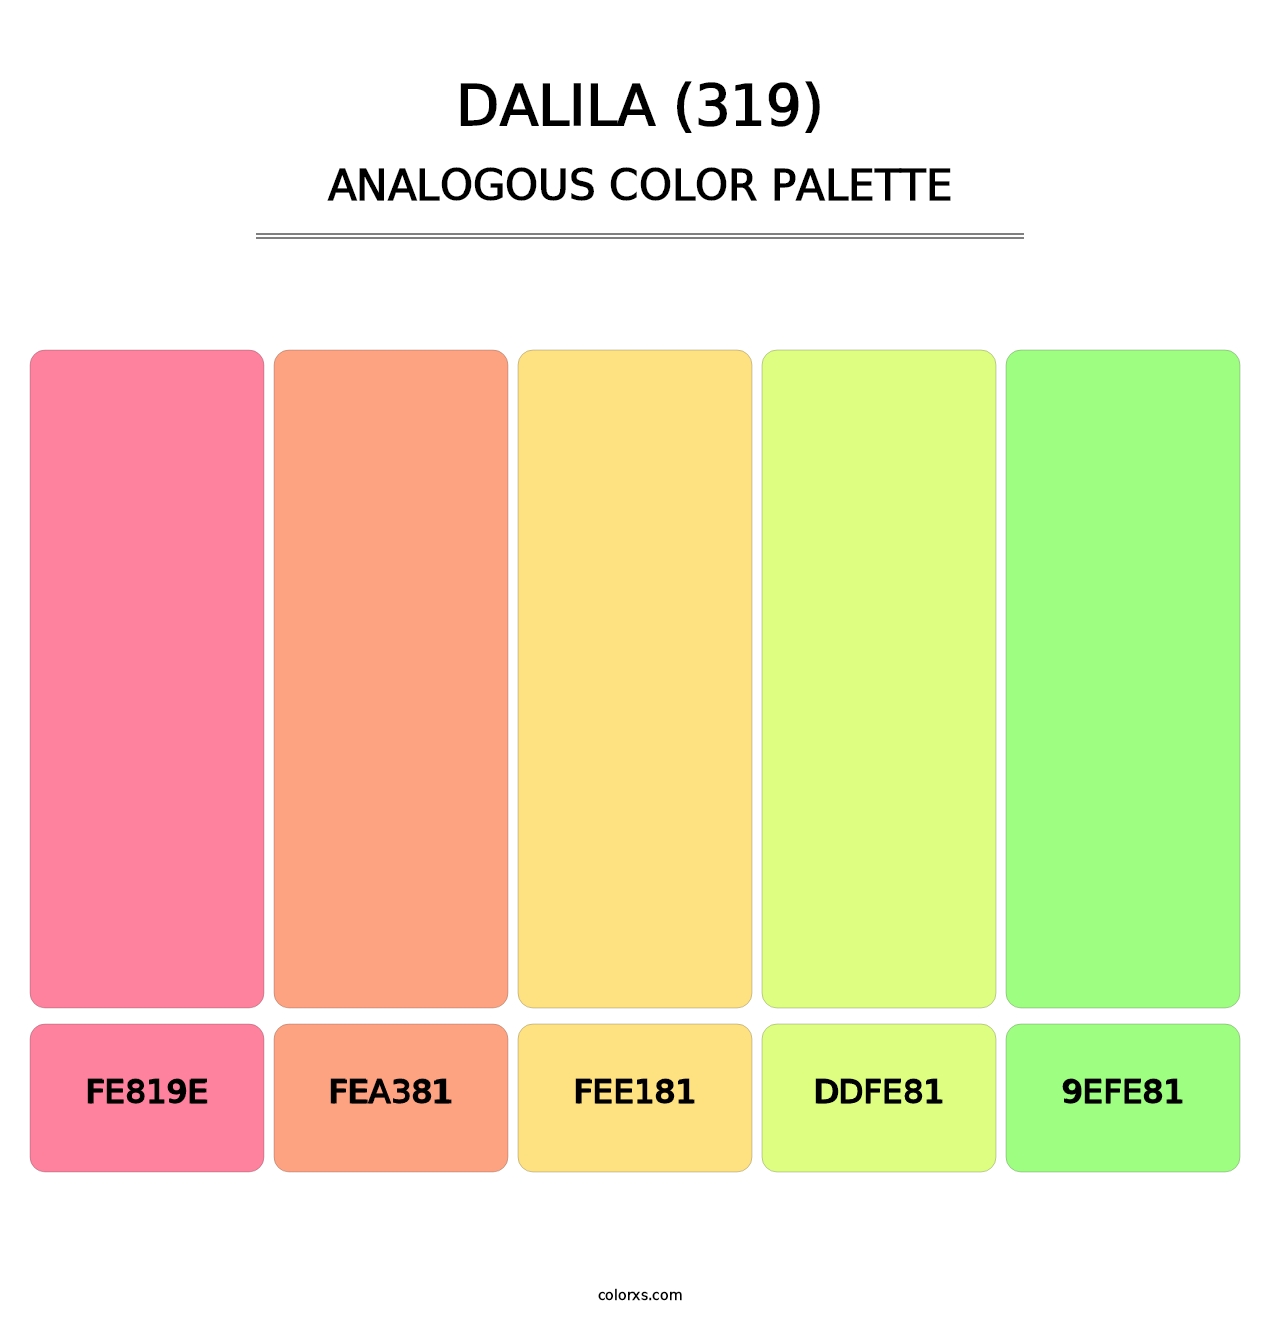 Dalila (319) - Analogous Color Palette